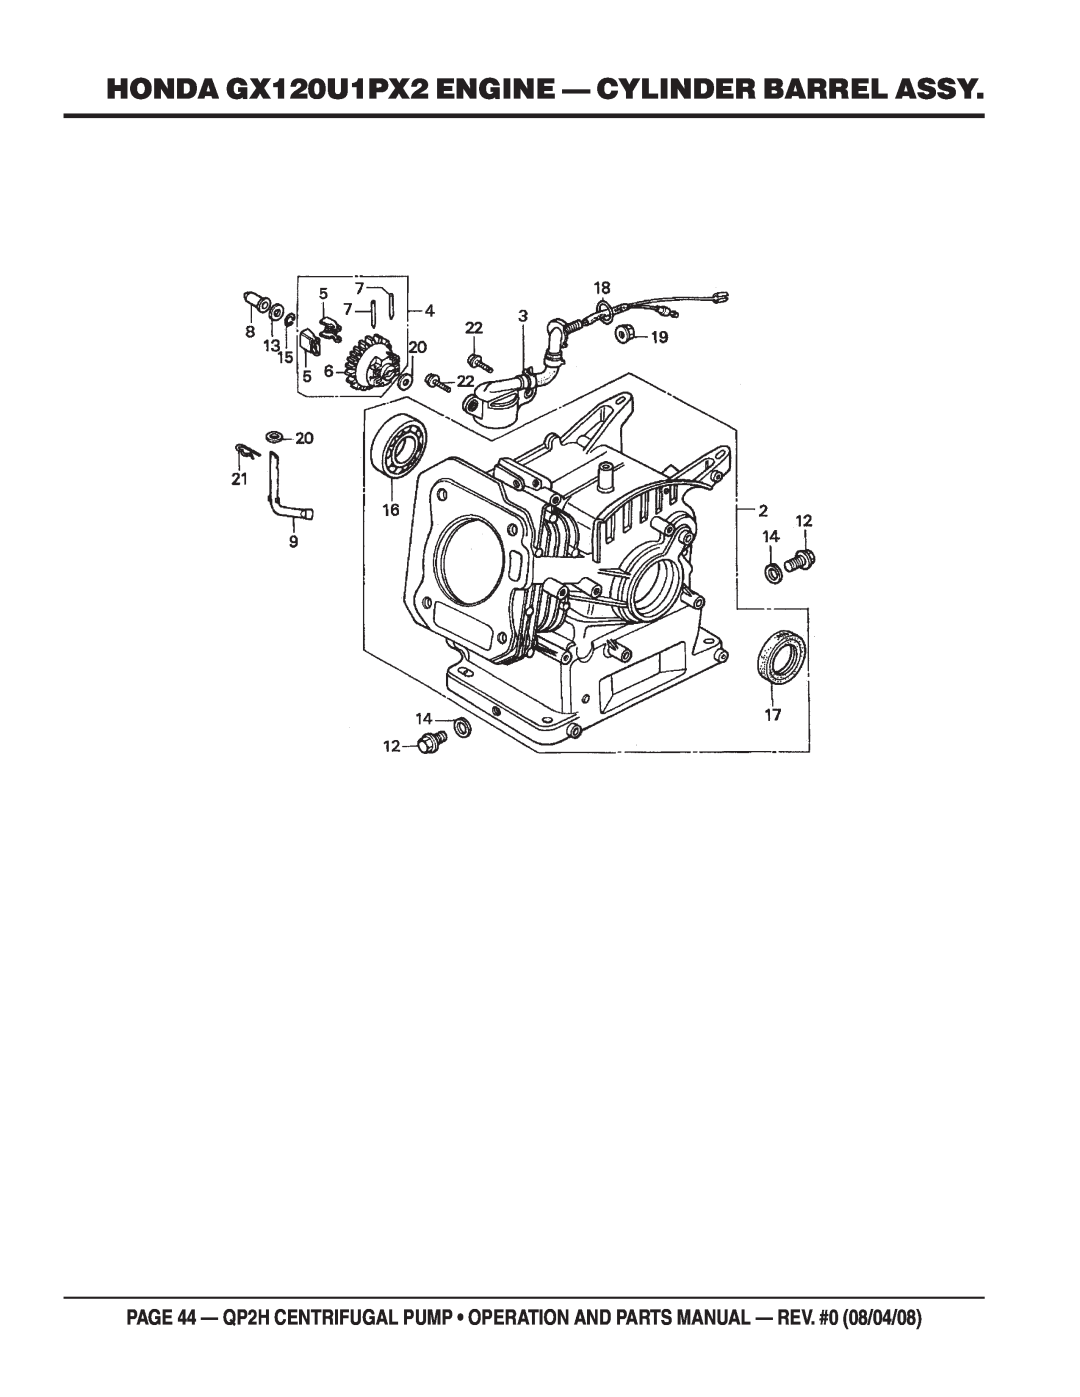 Multiquip QP2H manual HONDA GX120U1PX2 ENGINE - CYLINDER BARREL ASSY 